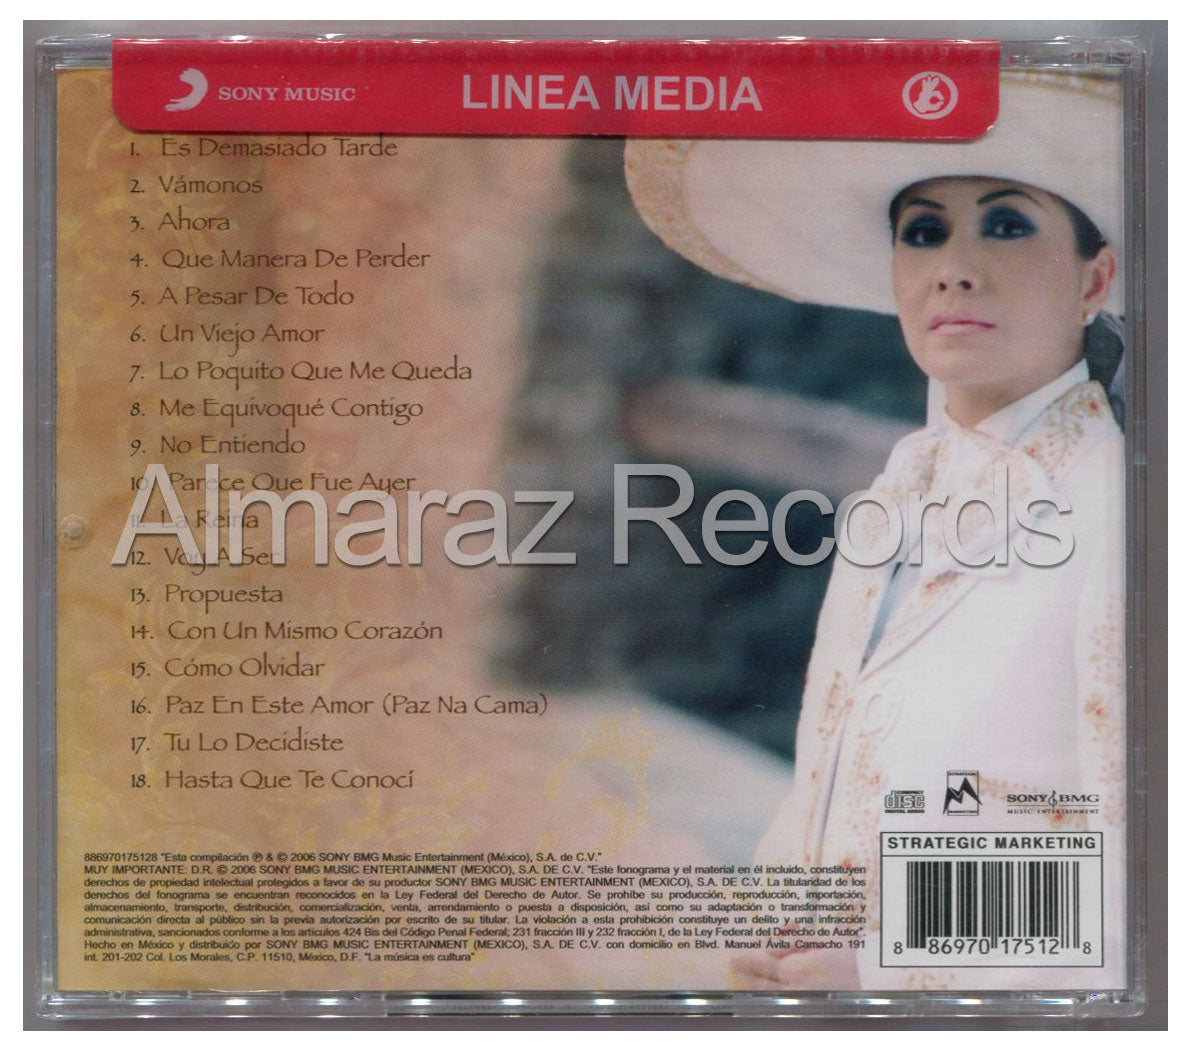 Ana Gabriel La Reina Canta A Mexico CD